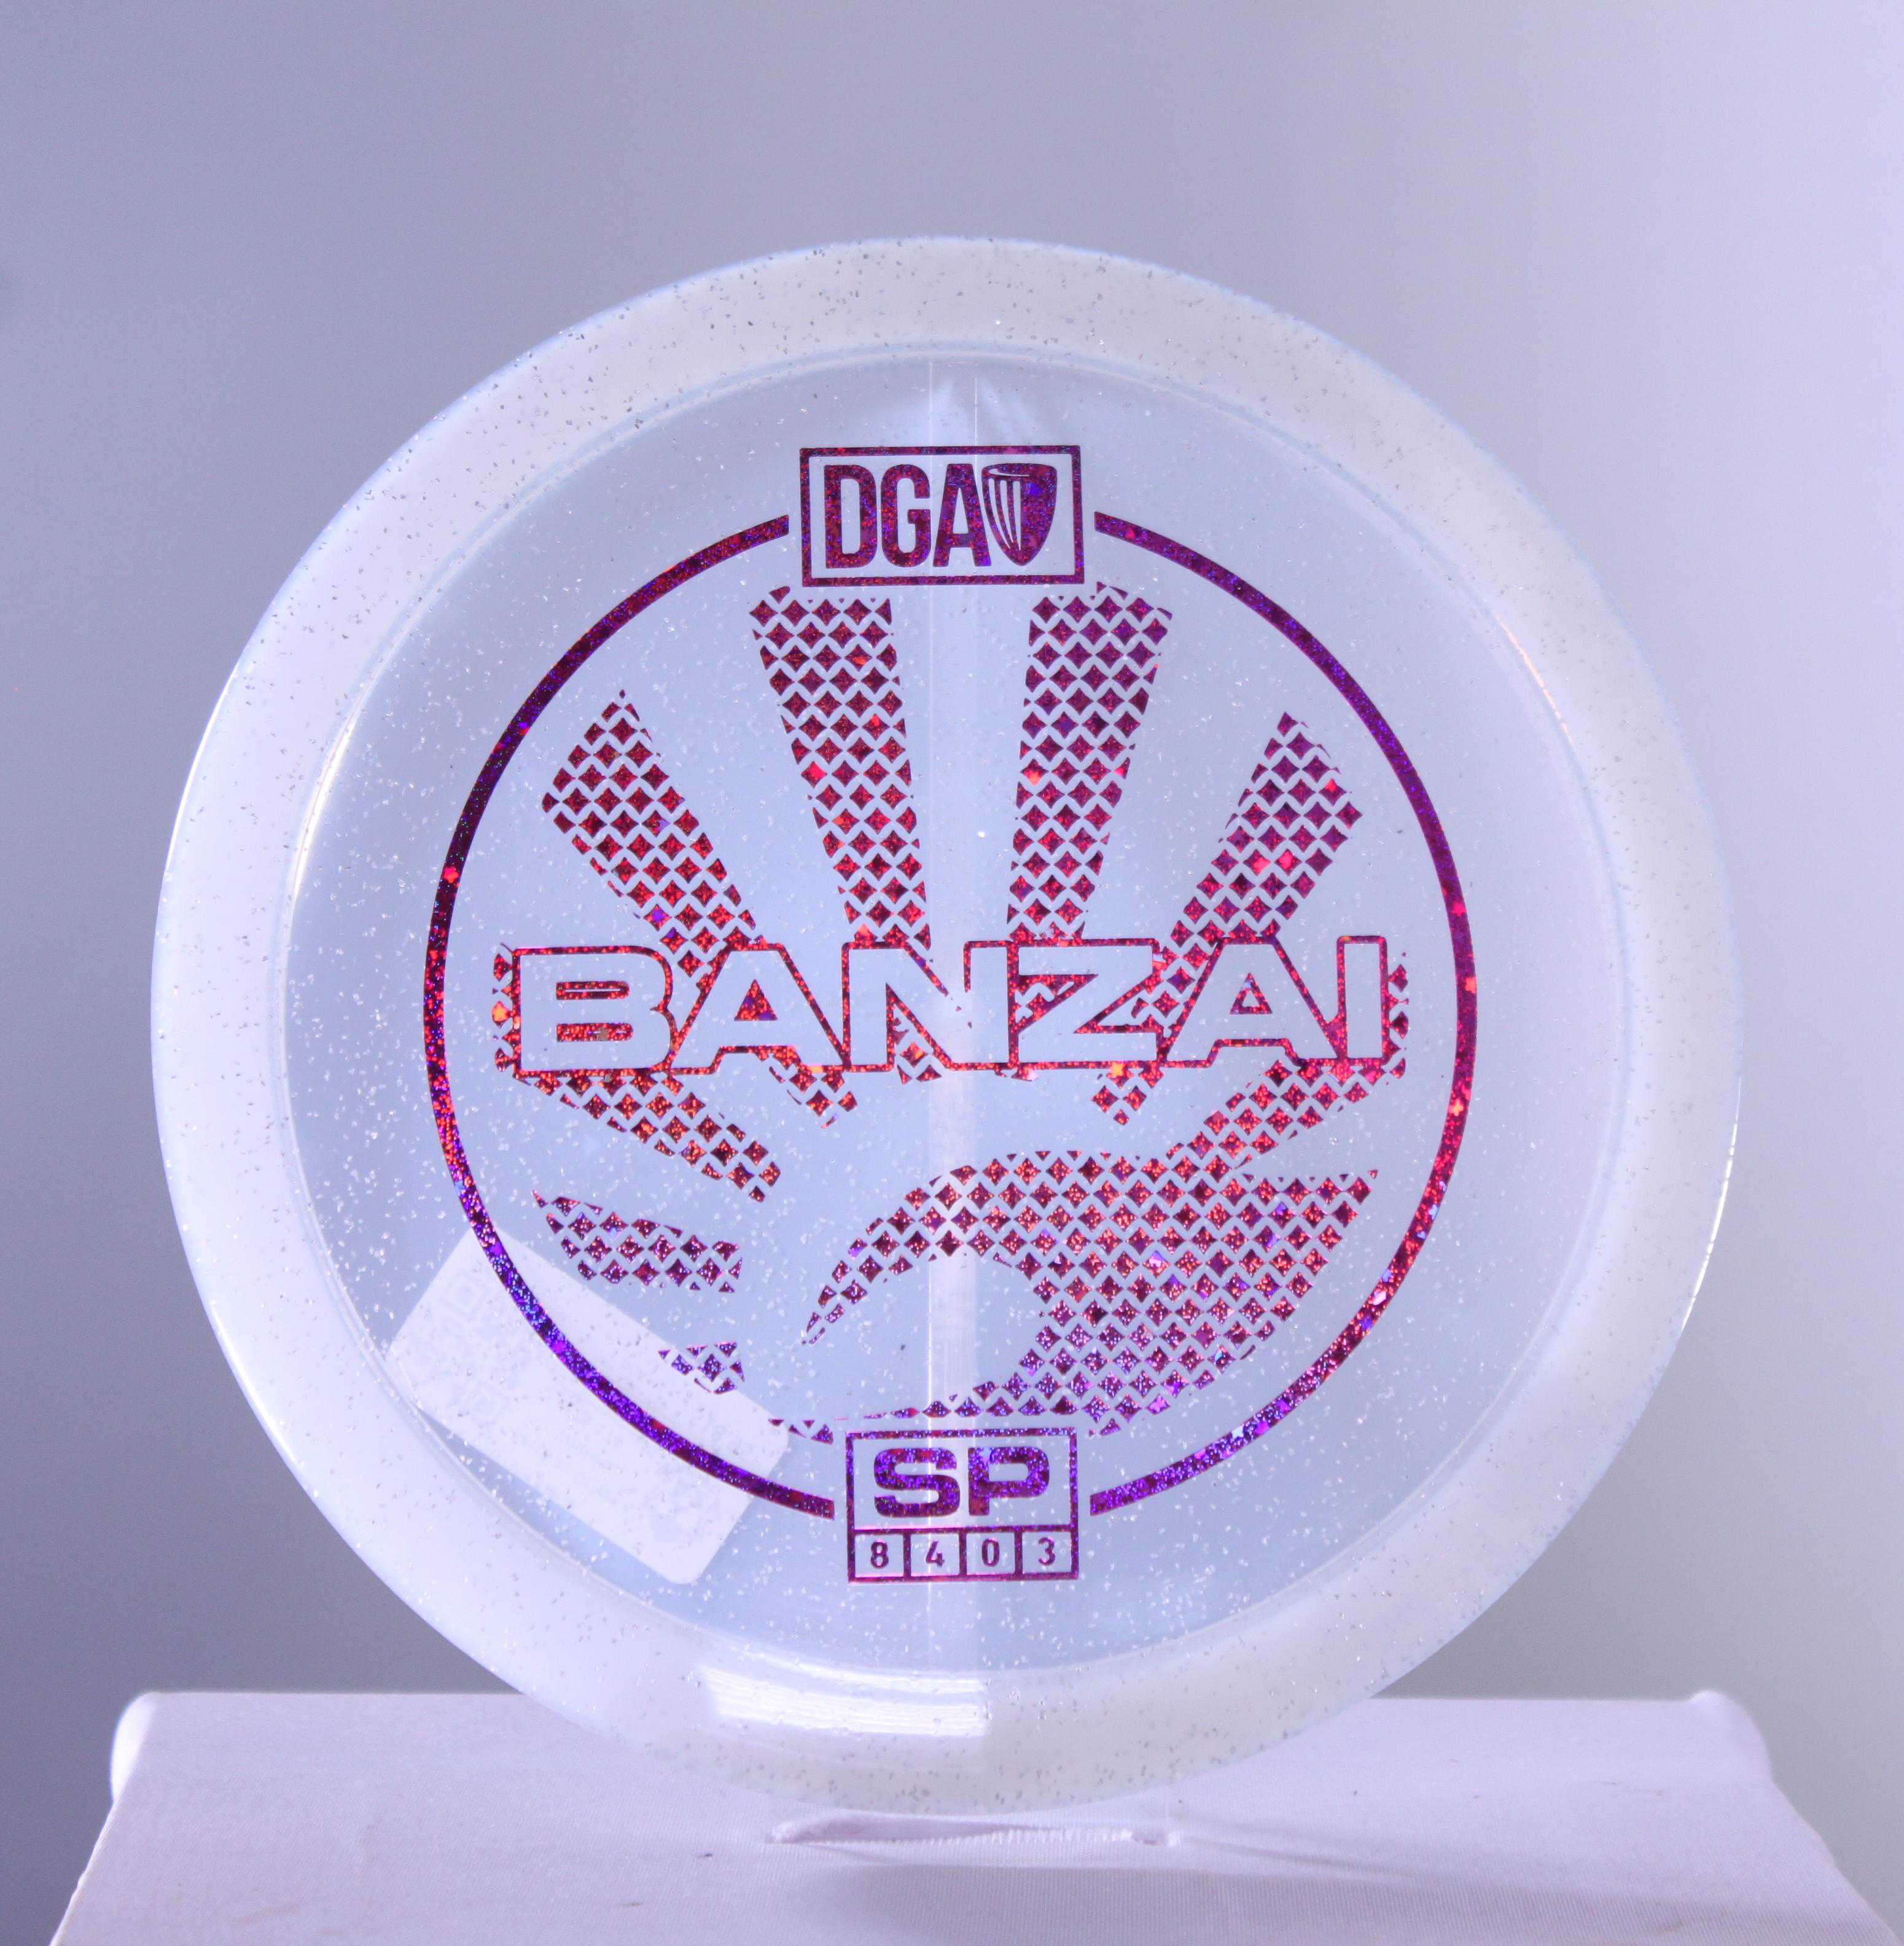 SP Line Banzai